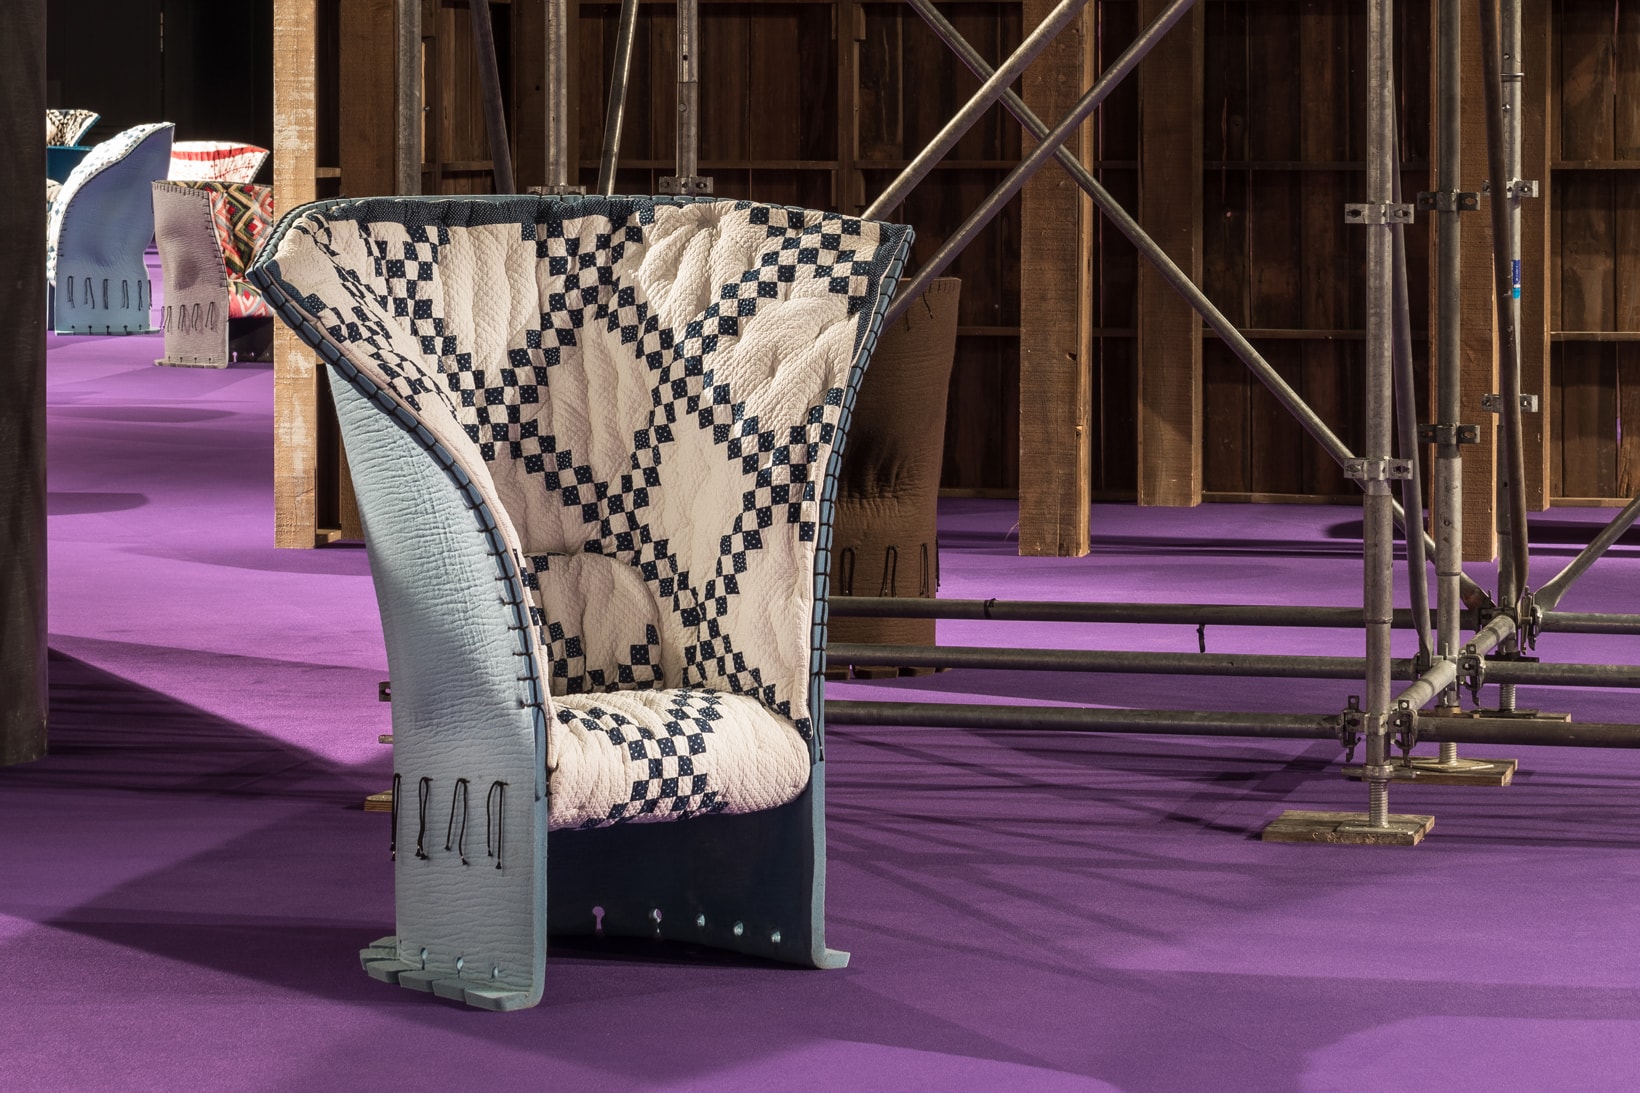 calvin klein raf simons cassina feltri armchairs design miami furniture home decor